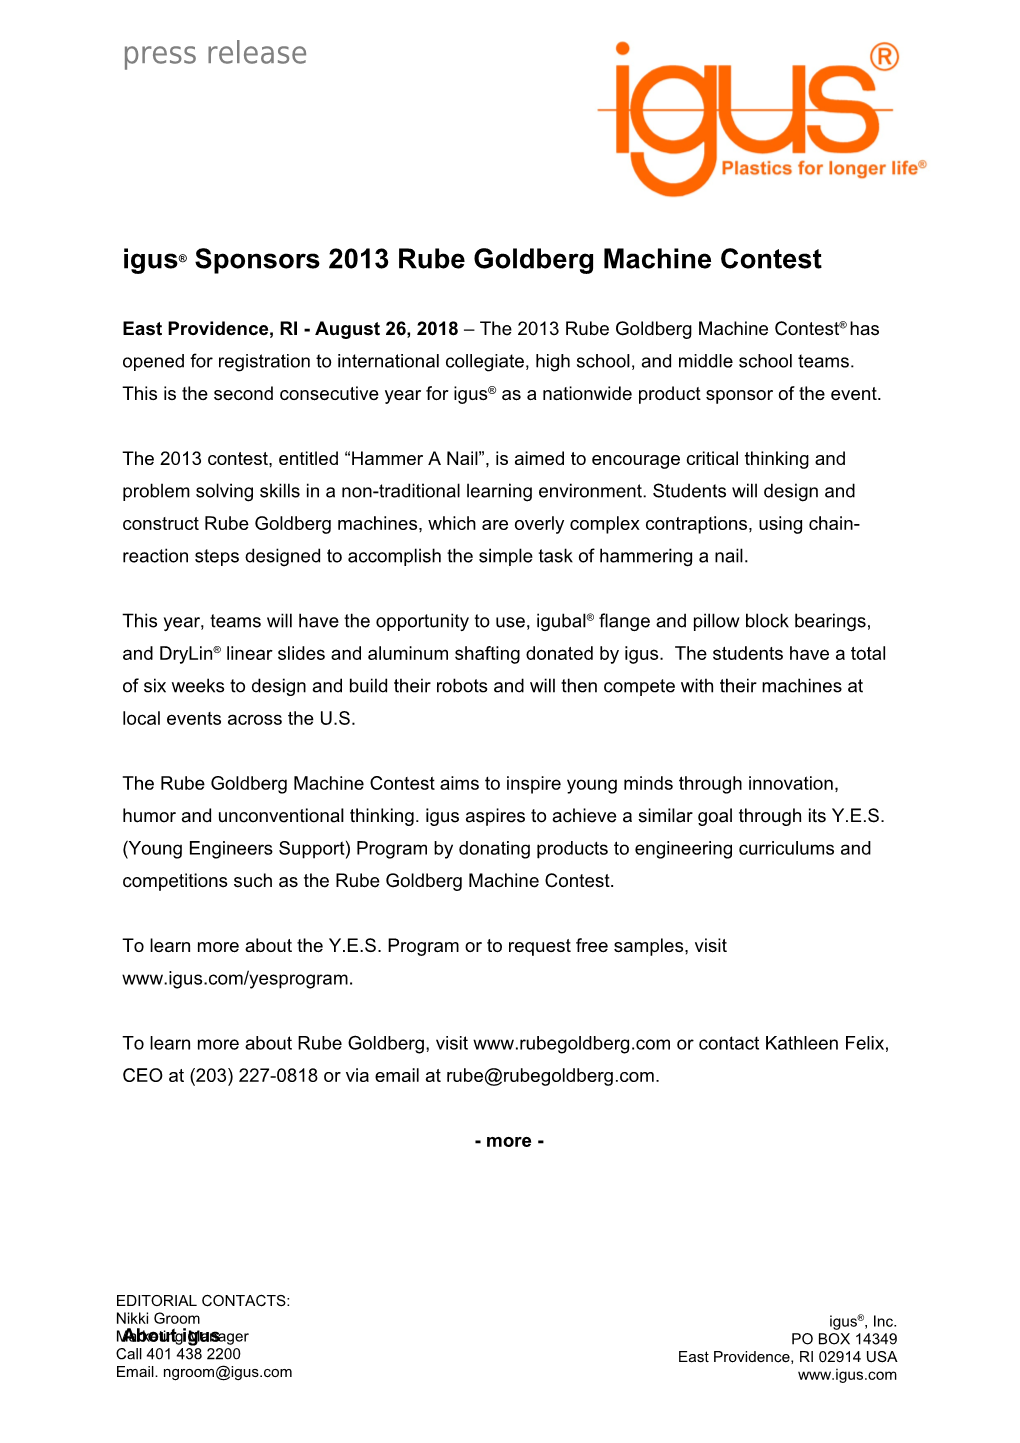 Igus Sponsors 2013 Rube Goldberg Machine Contest